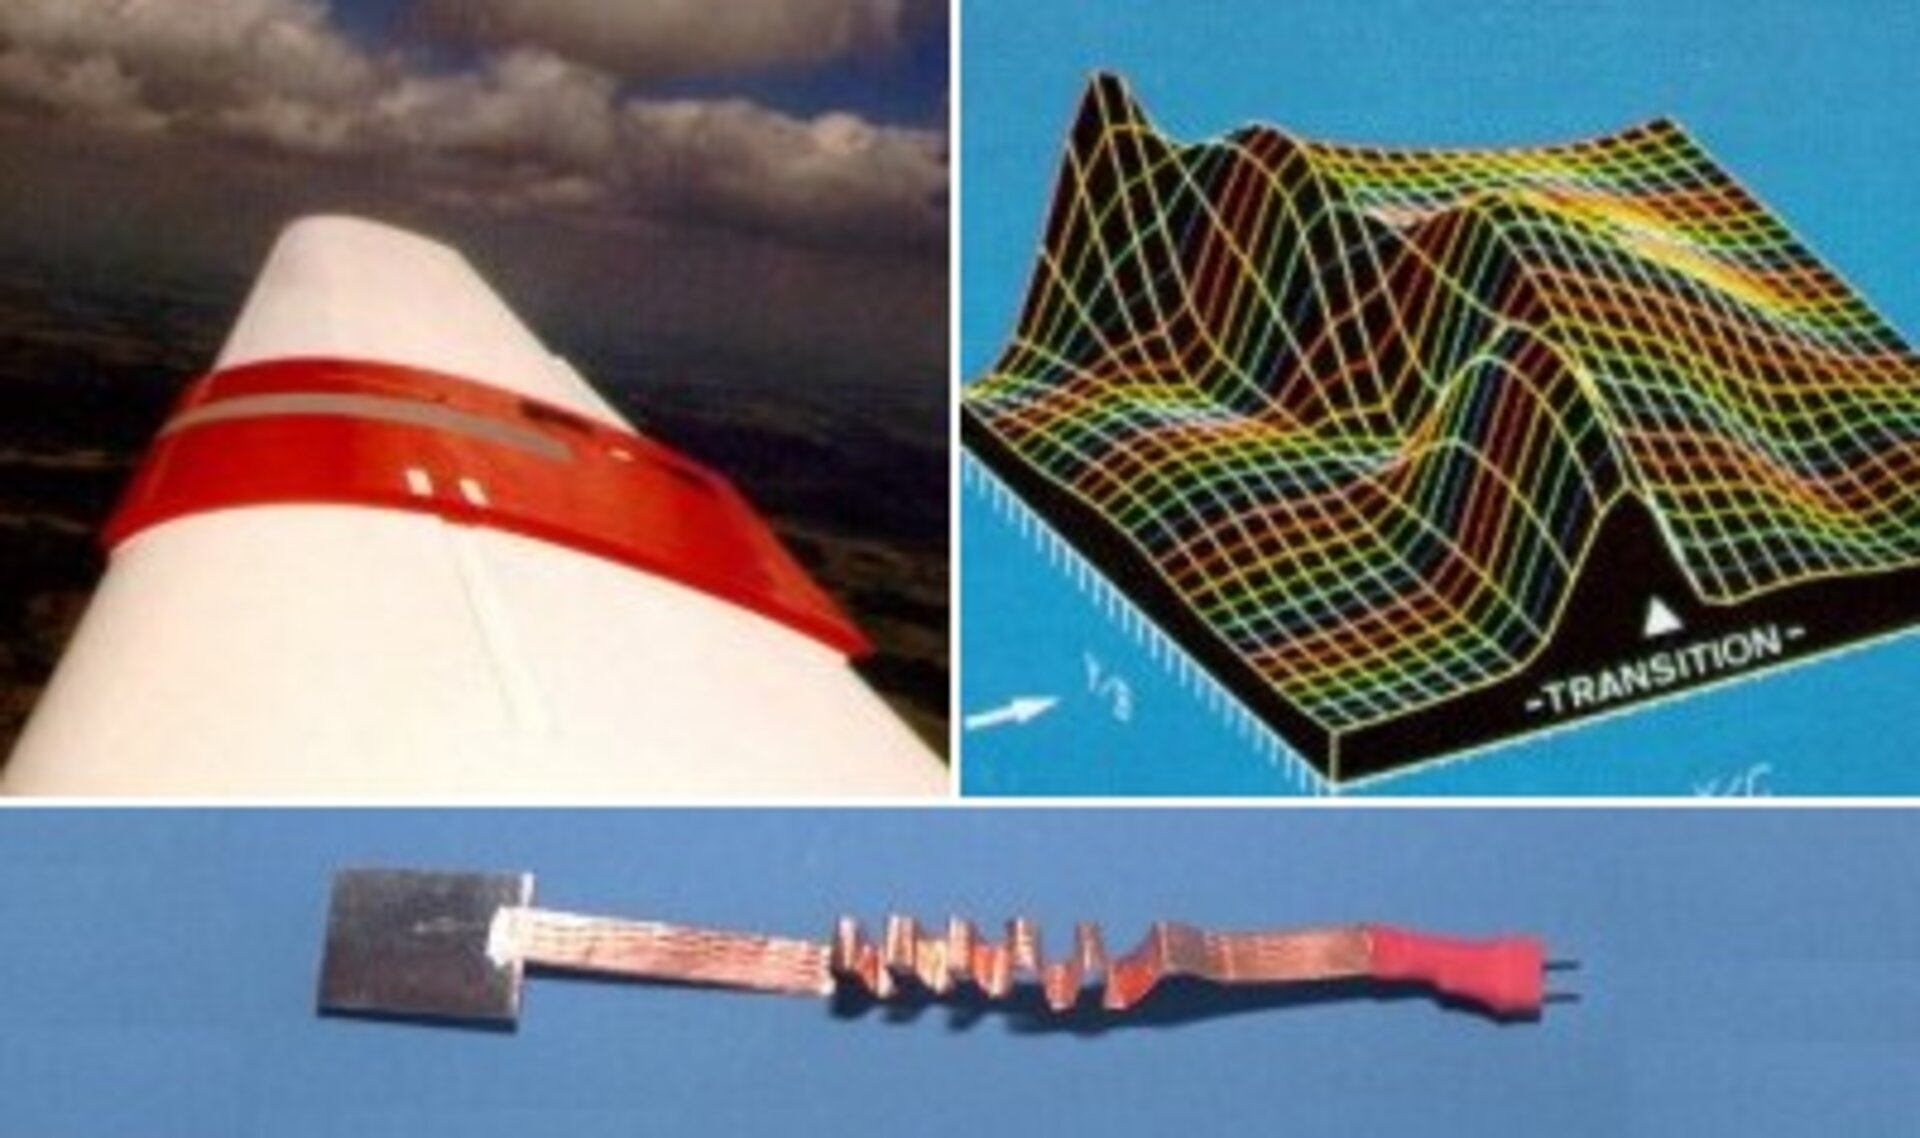 Space piezoelectric sensors measures plane wing air flow